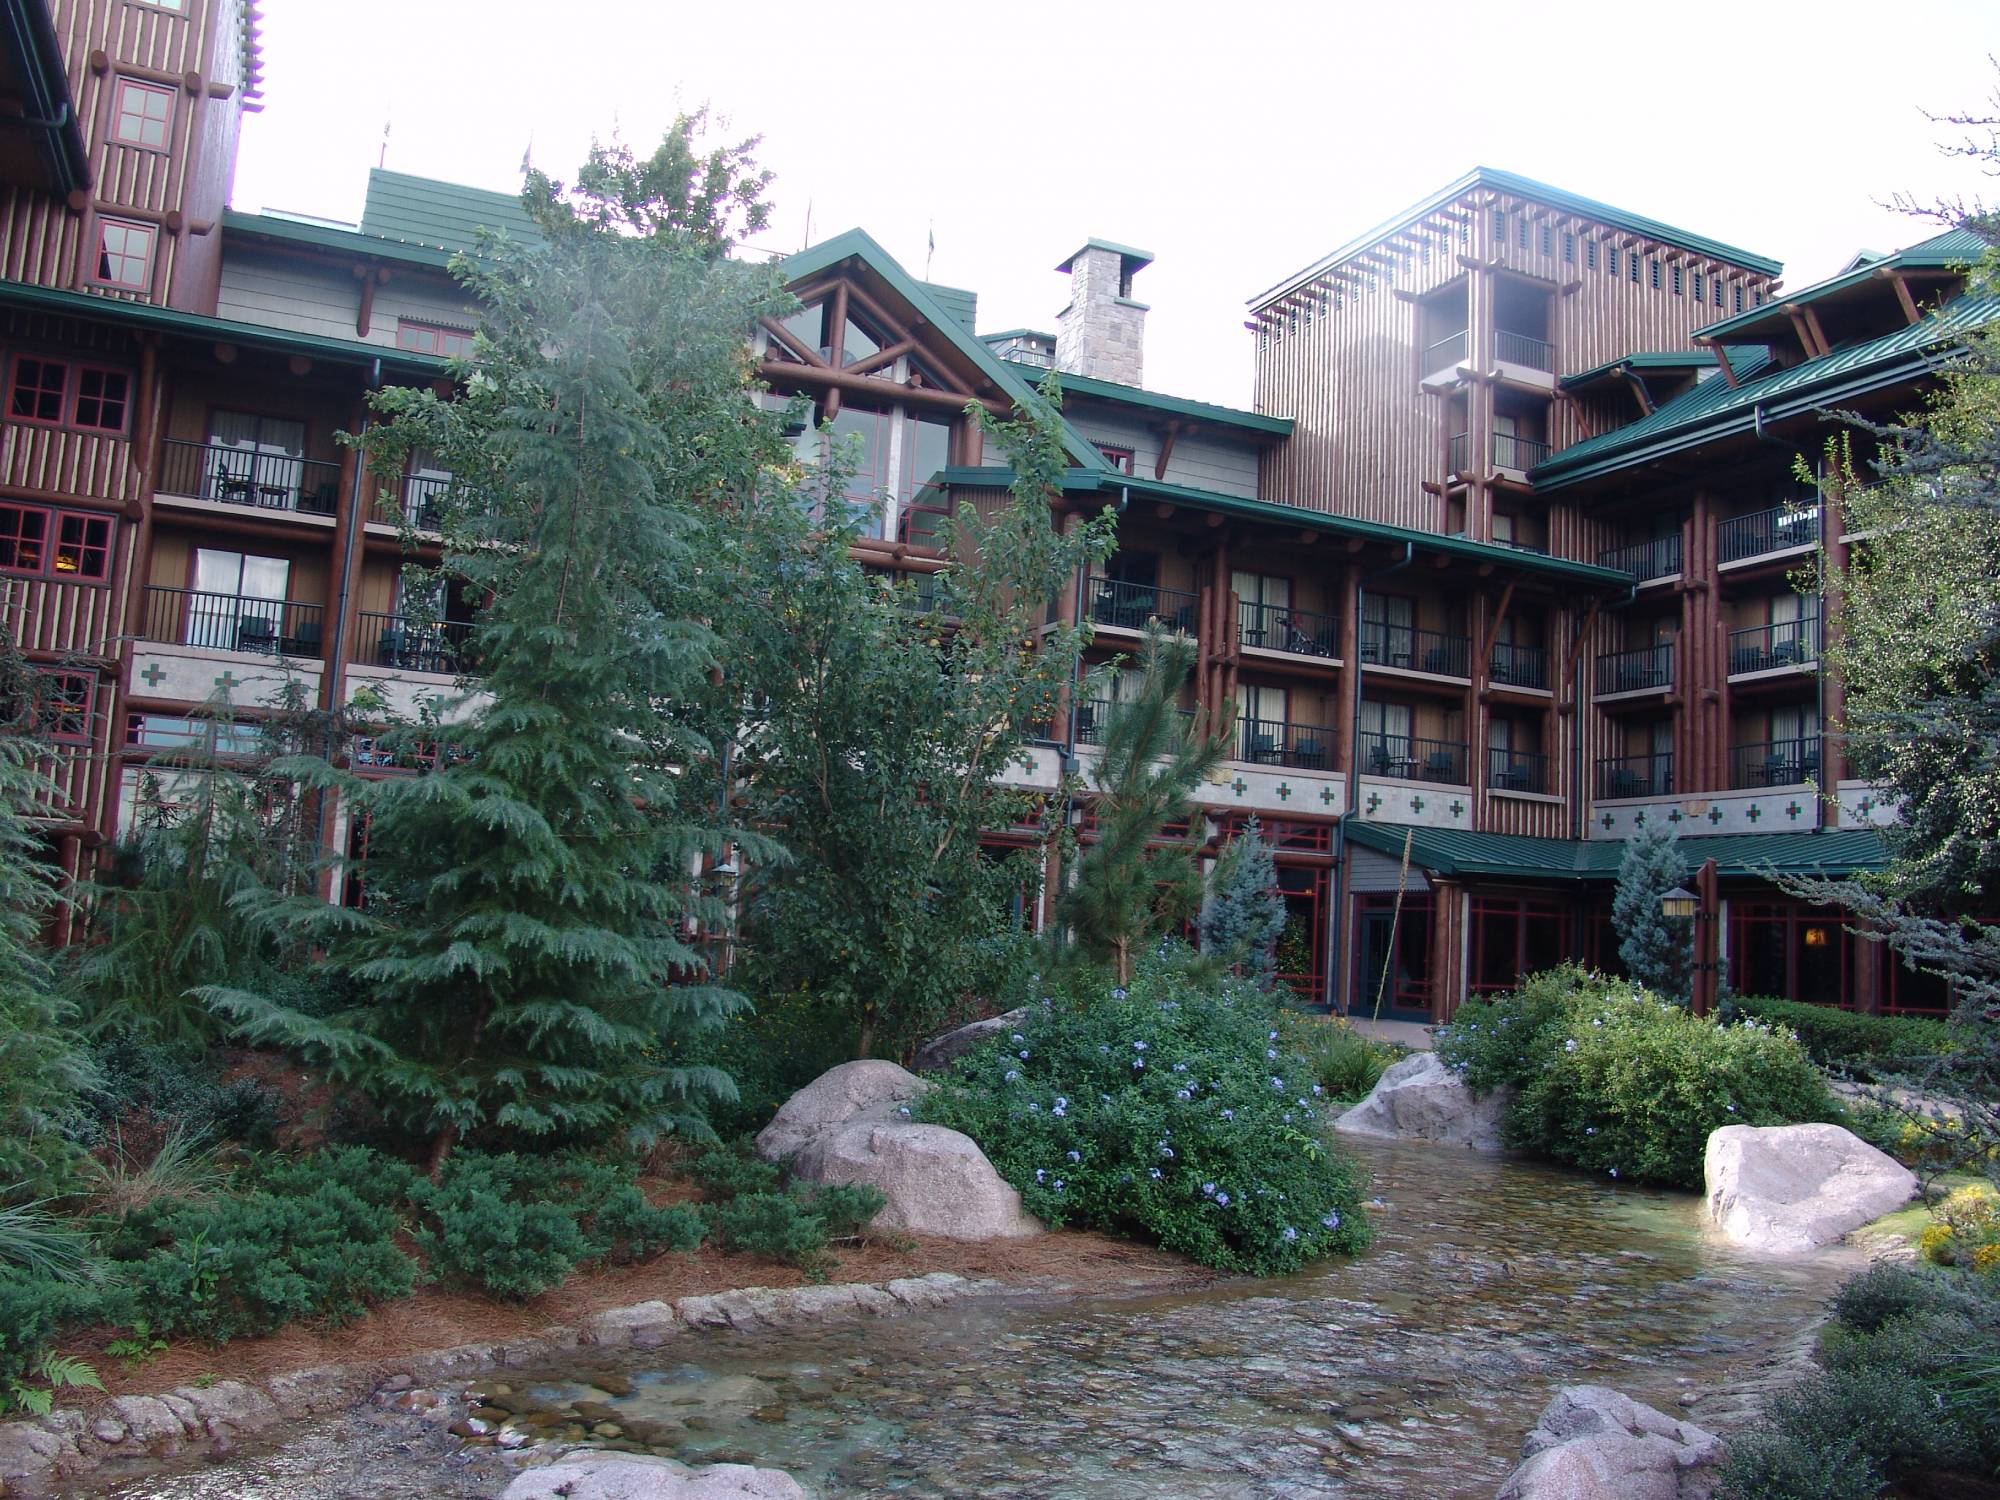 Wilderness Lodge - courtyard view